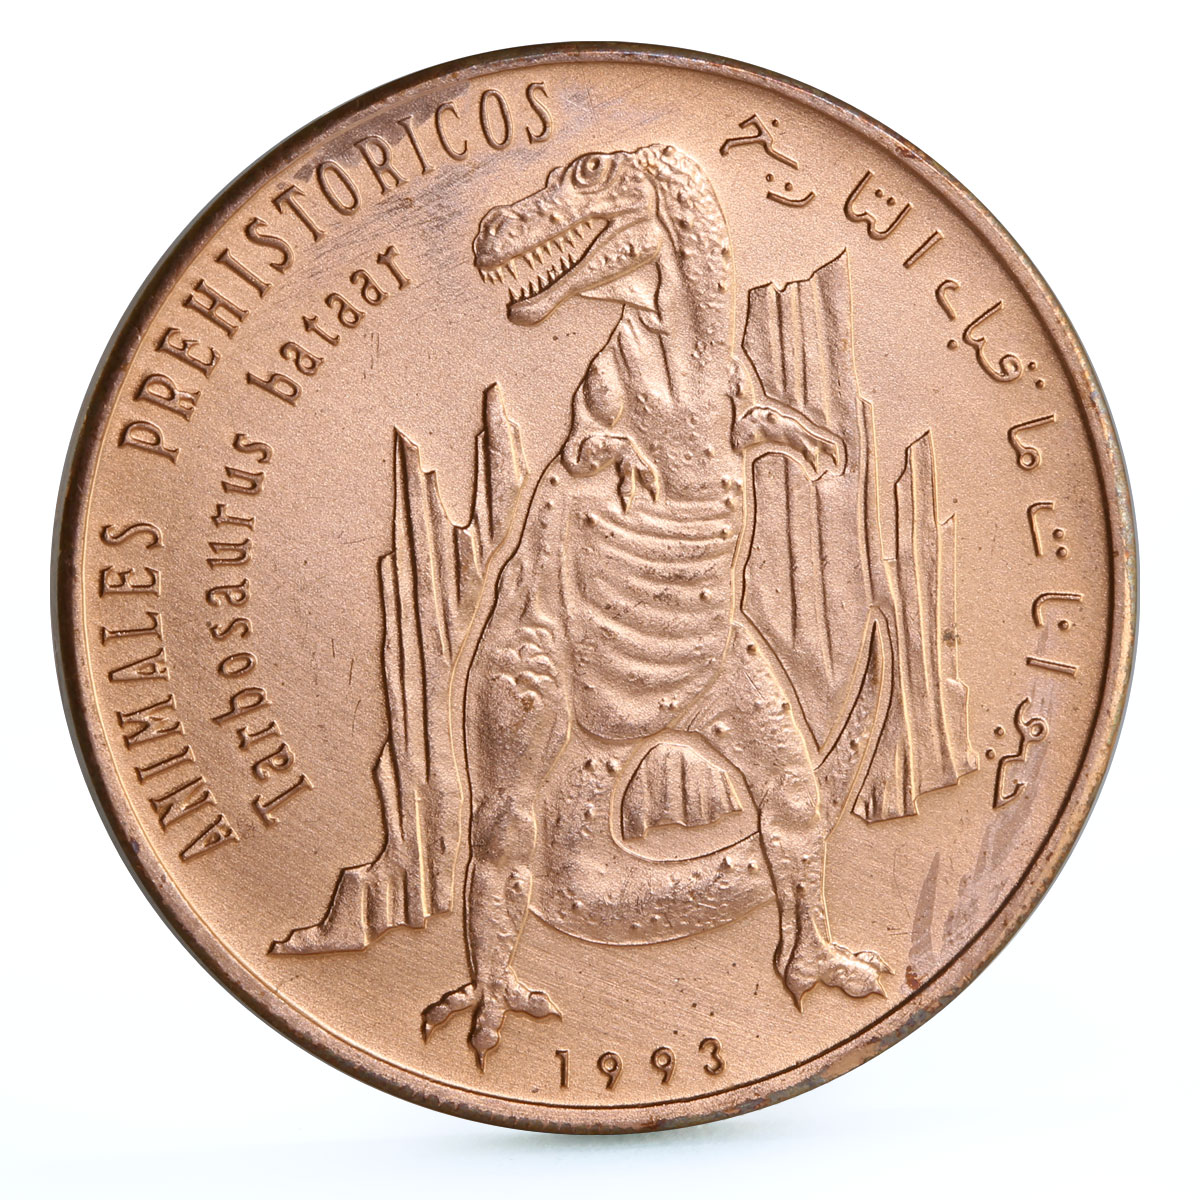 Saharawi 100 pesetas Prehistoric Animals Dinosaurs Tarbosaurus copper coin 1993